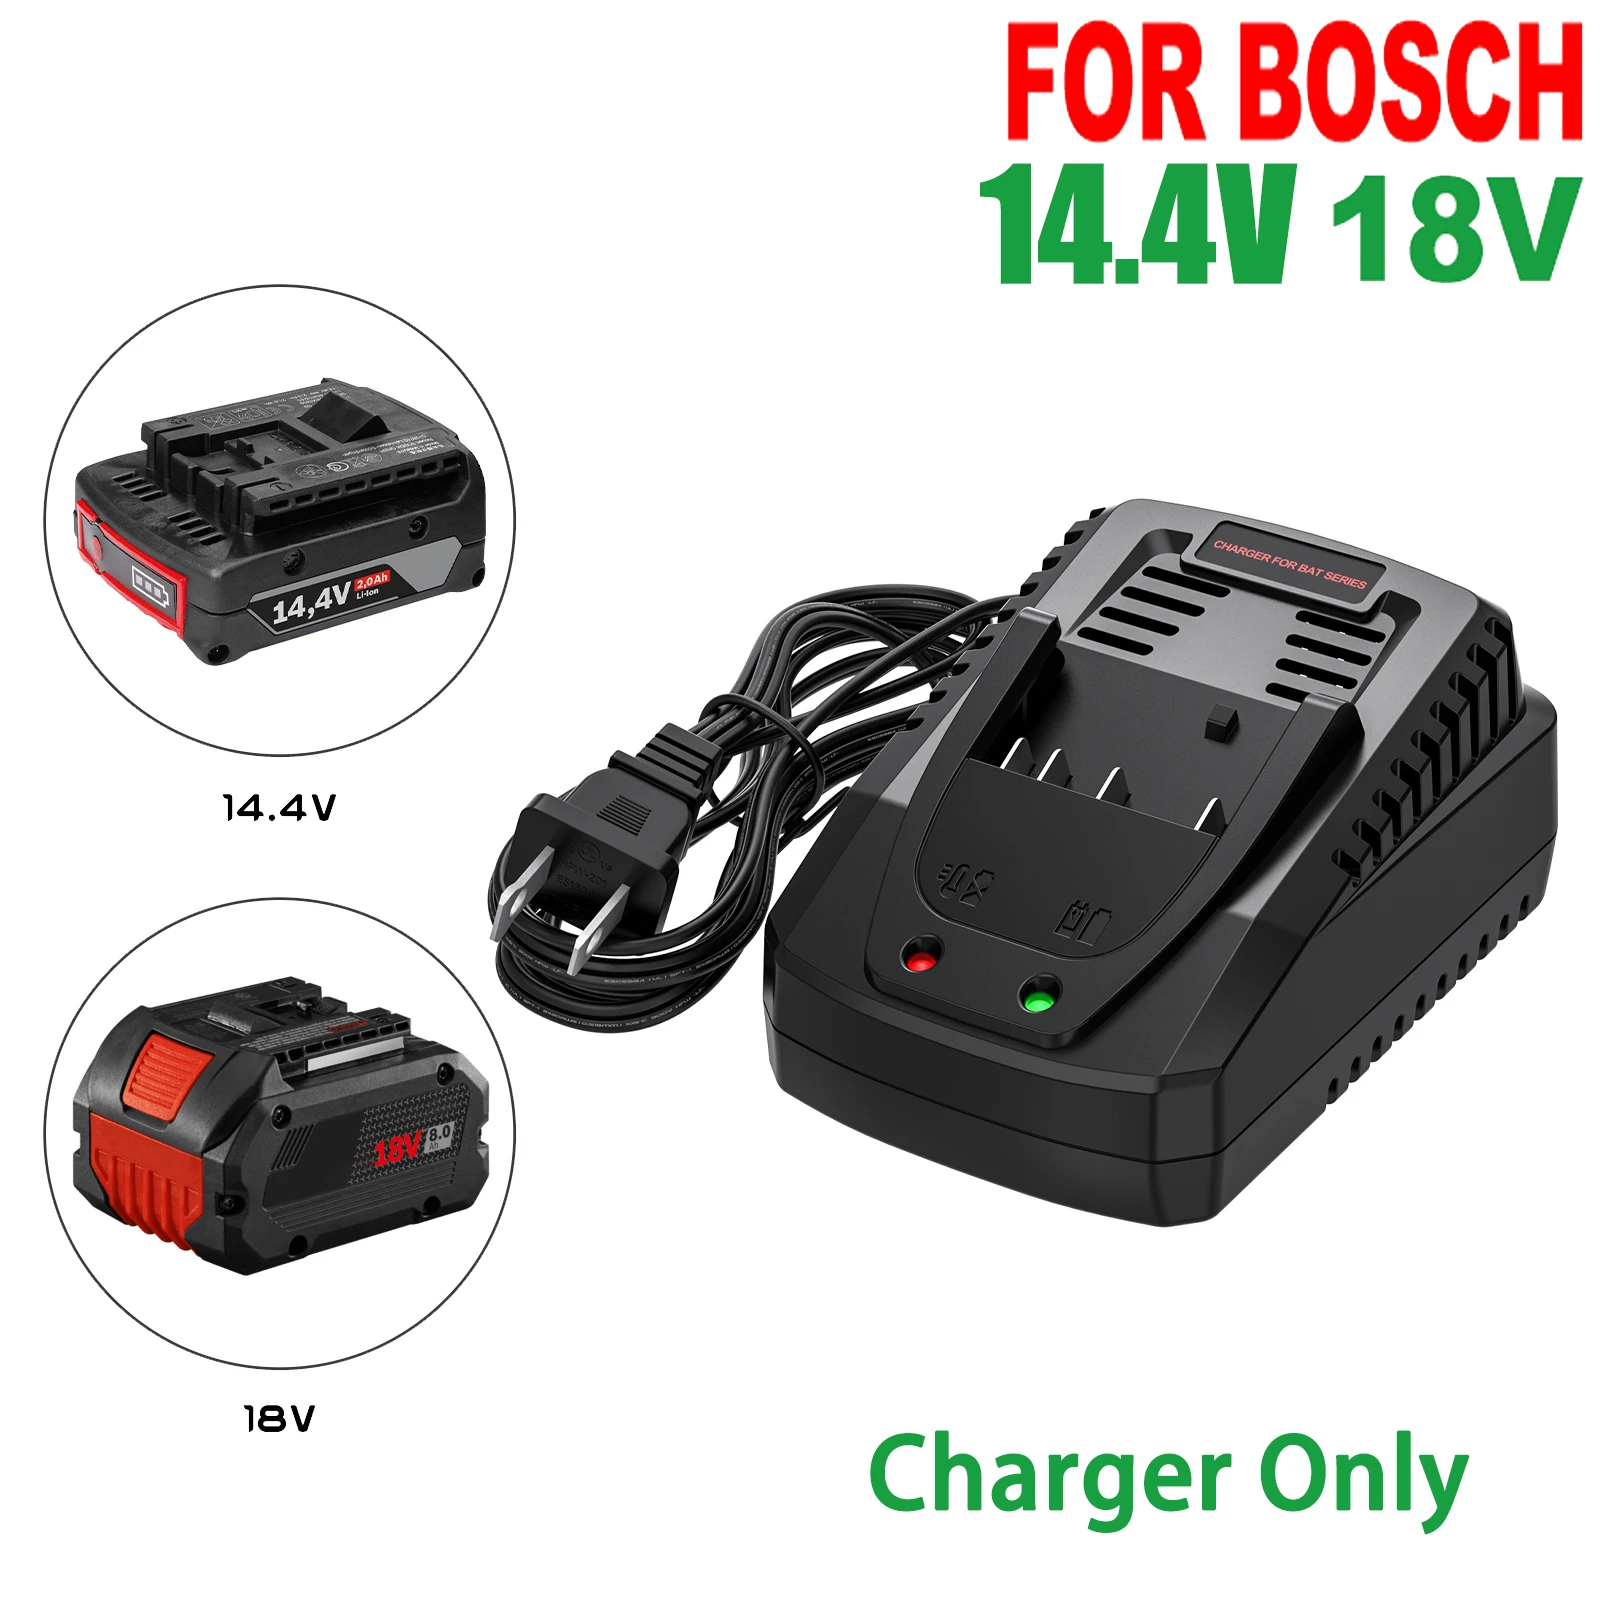 

3A Li-ion Battery Charger For Bosch 14.4V 18V Battery BAT609 BAT609G BAT618 BAT618G Charger AL1860CV AL1814CV AL1820CV